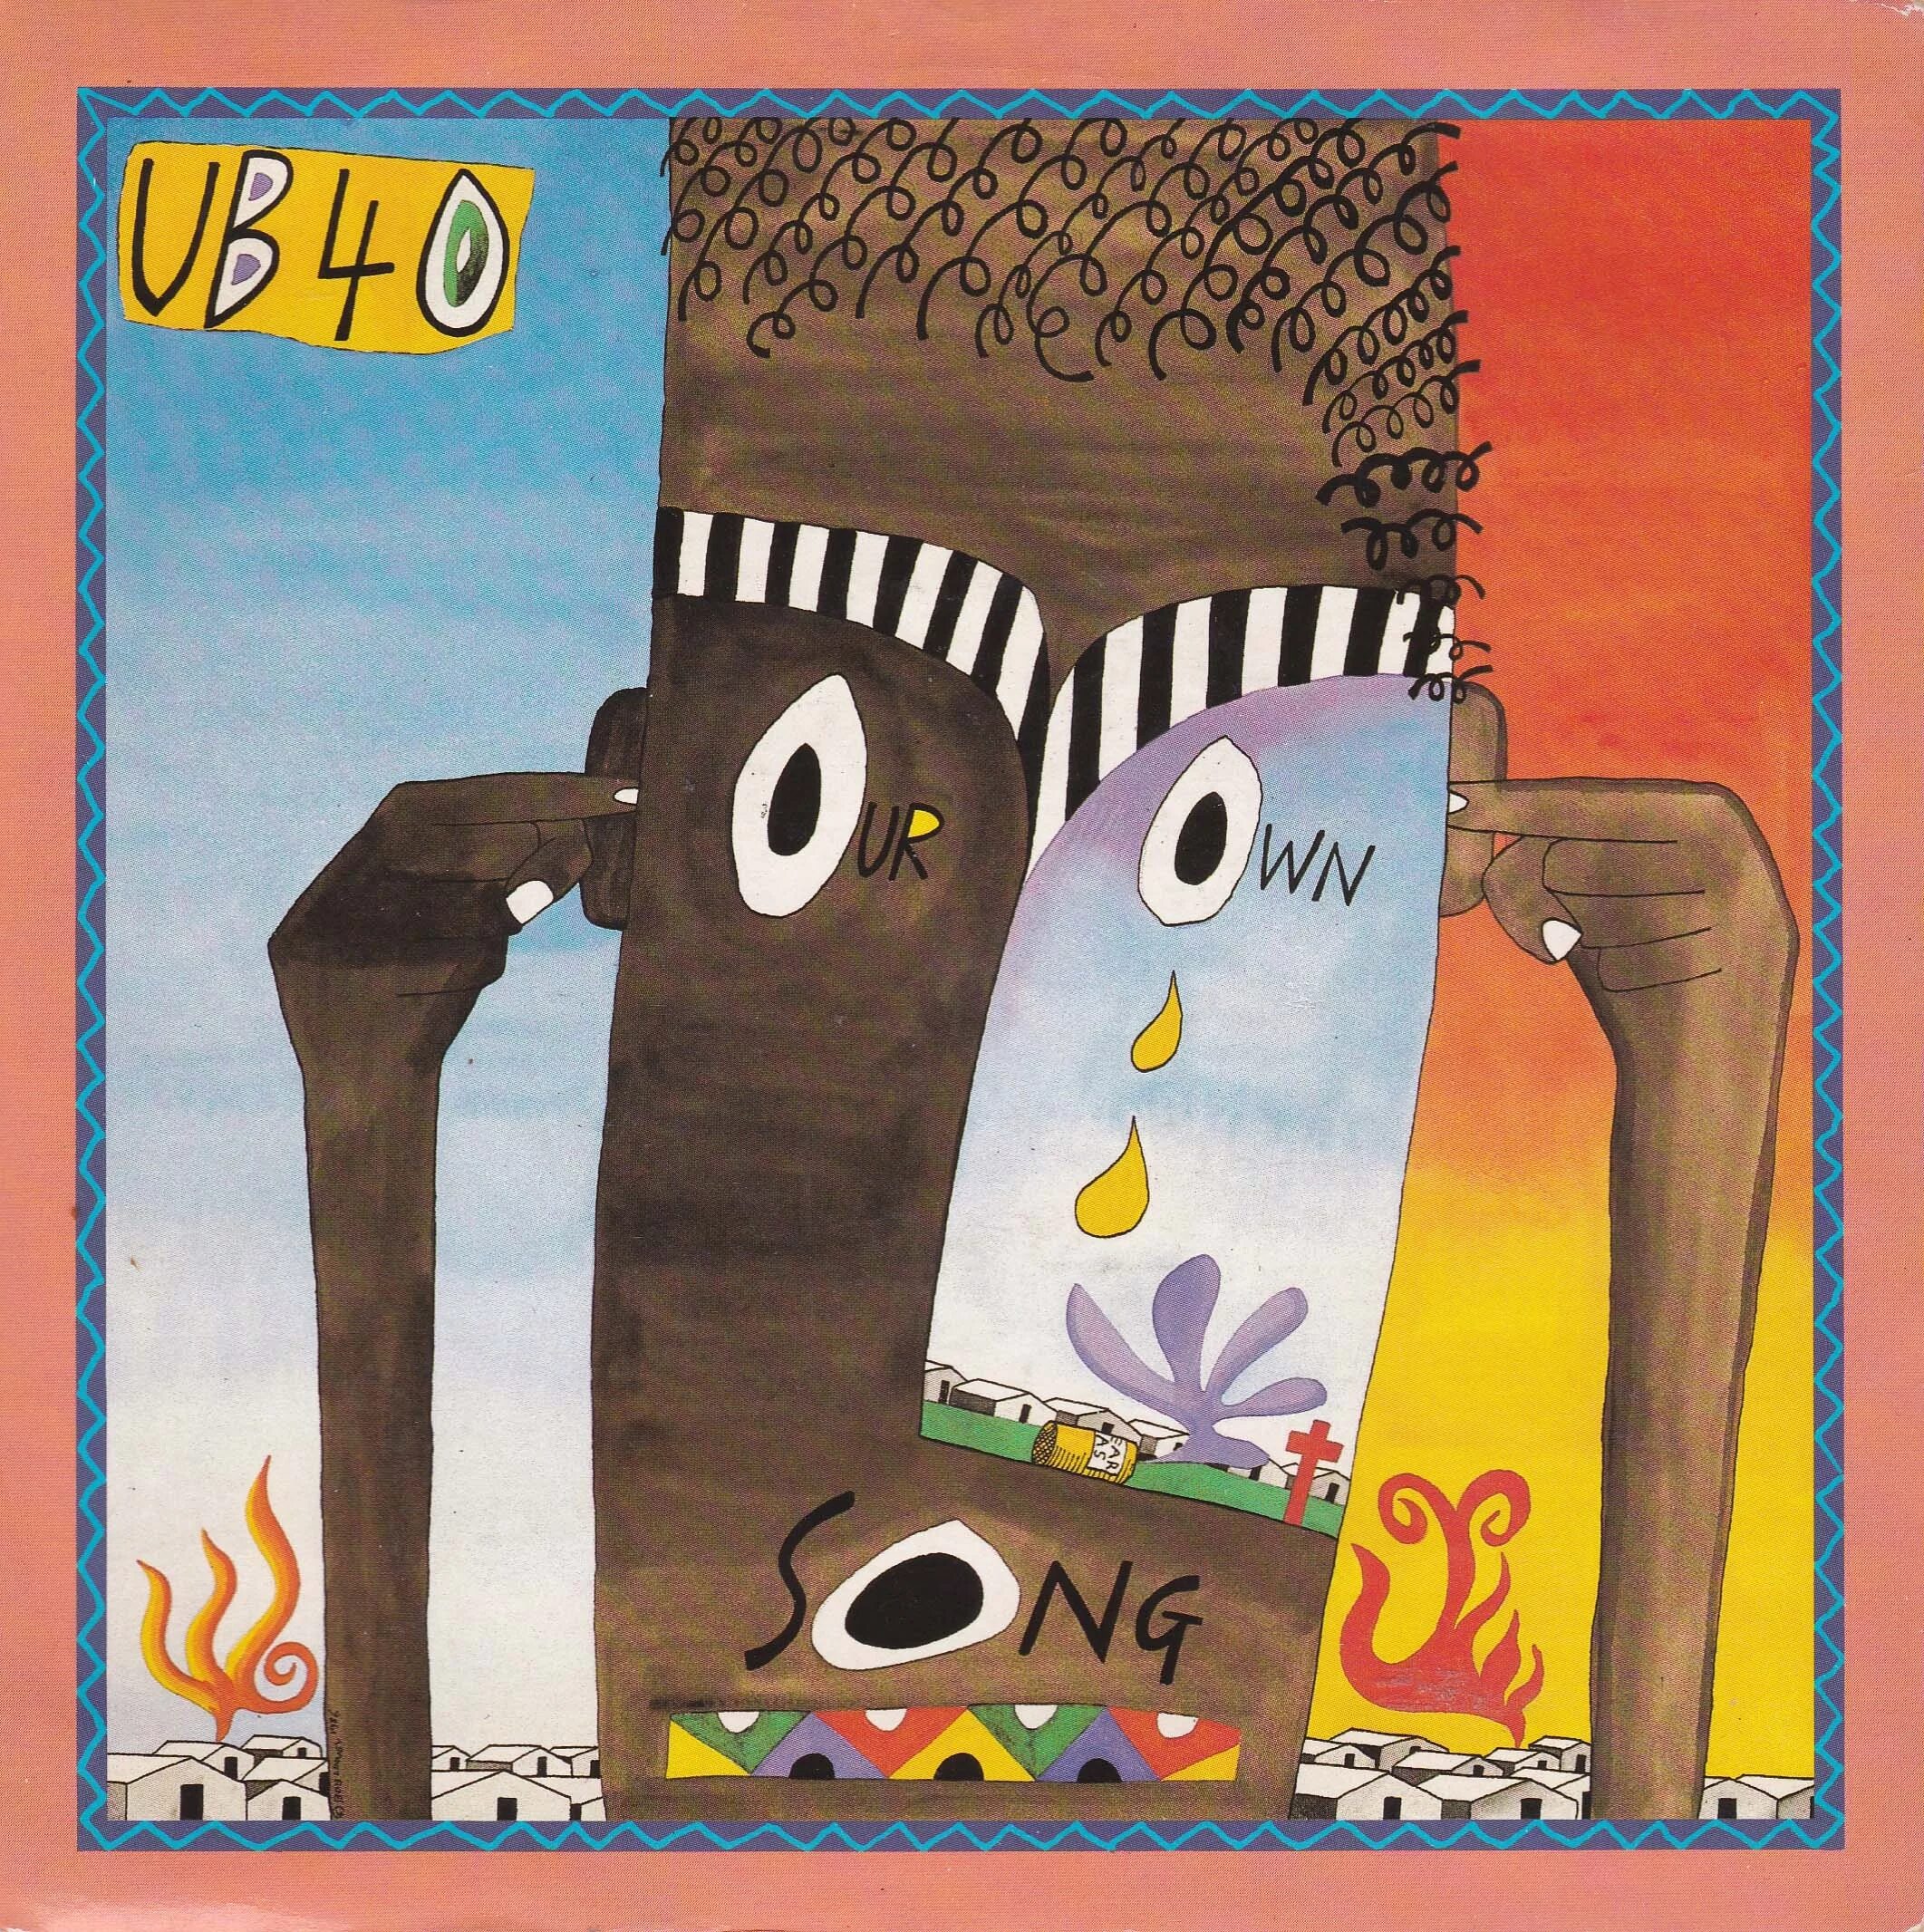 Own songs. Ub40 виниловая пластинка. Sing our own Song ub40. 1986: Ub40. UB 40 LP.